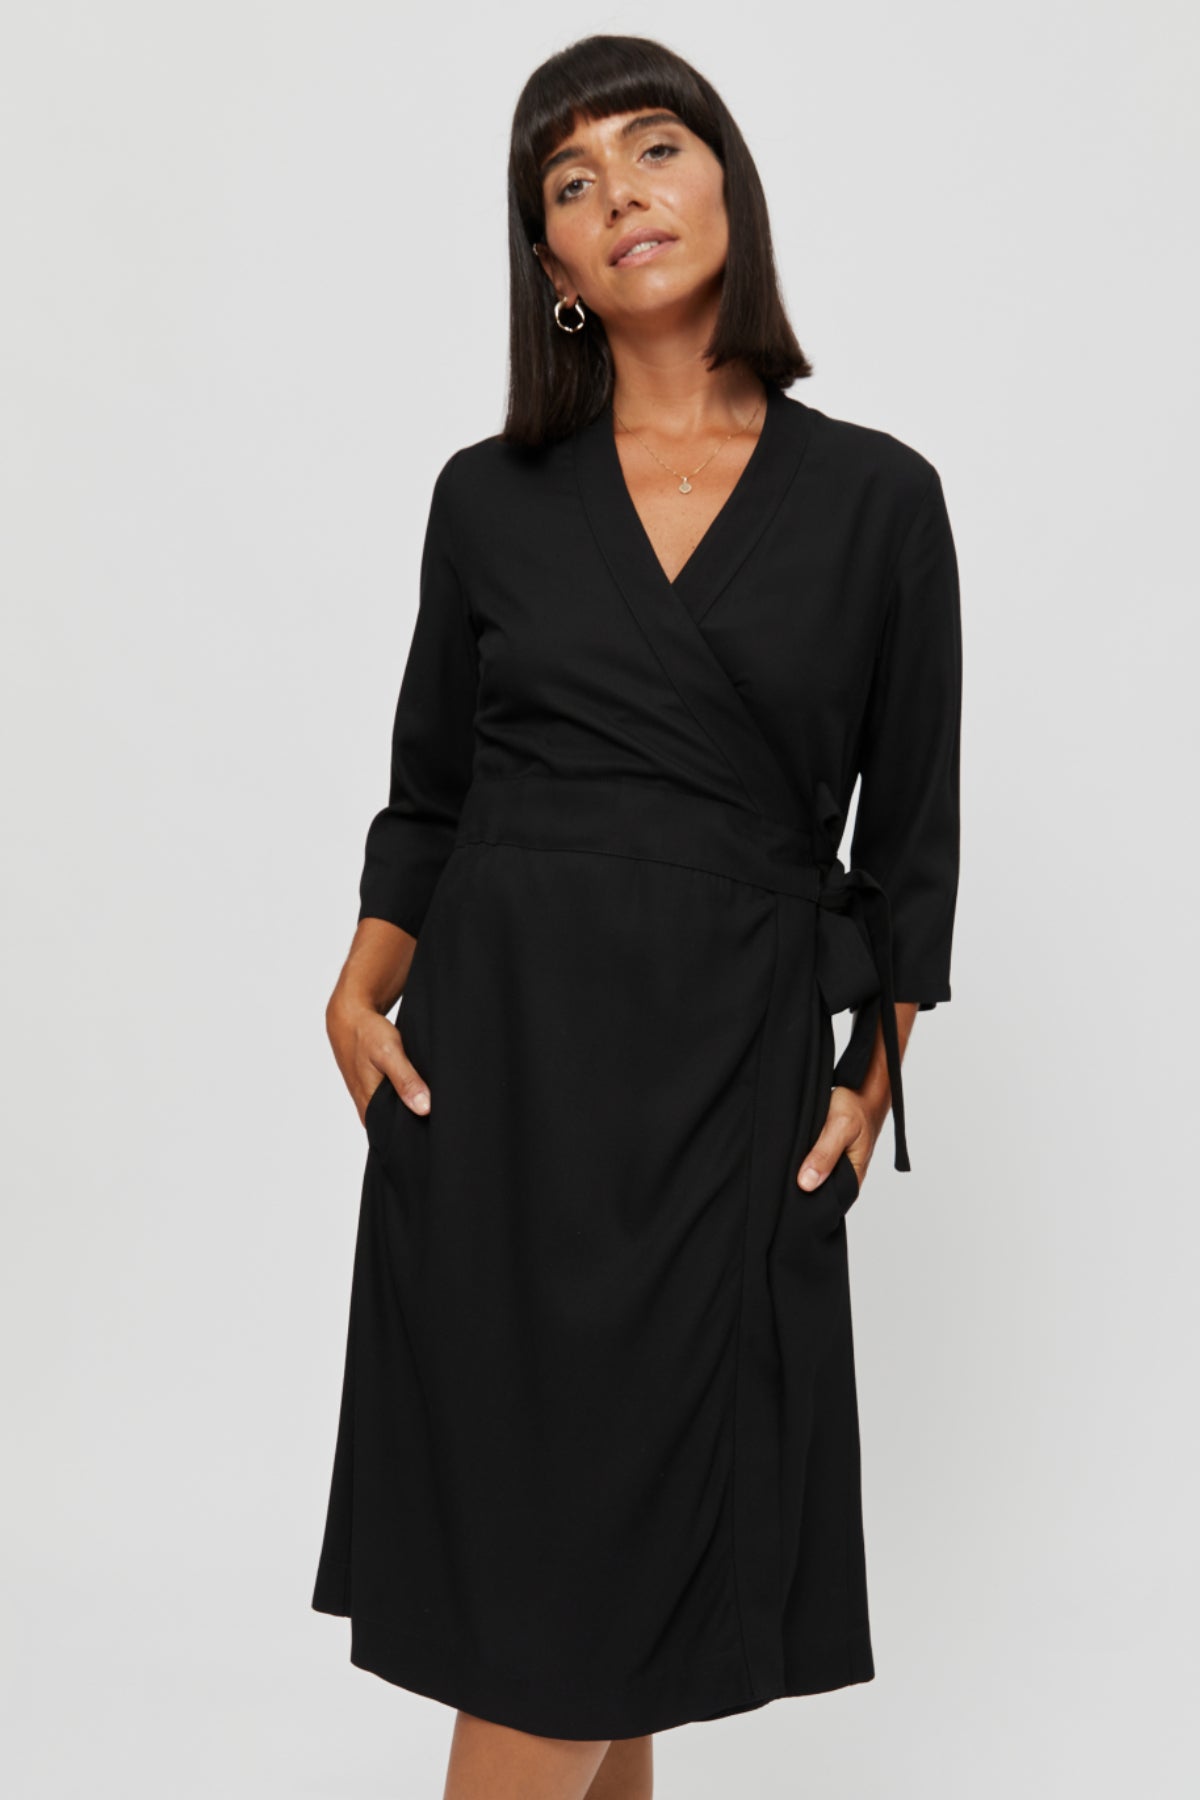 Black Wrap Dress SANDRA. Midi Formal V Neck Wrap Dress · Cocktail and Evening Wrap Dress - AYANI